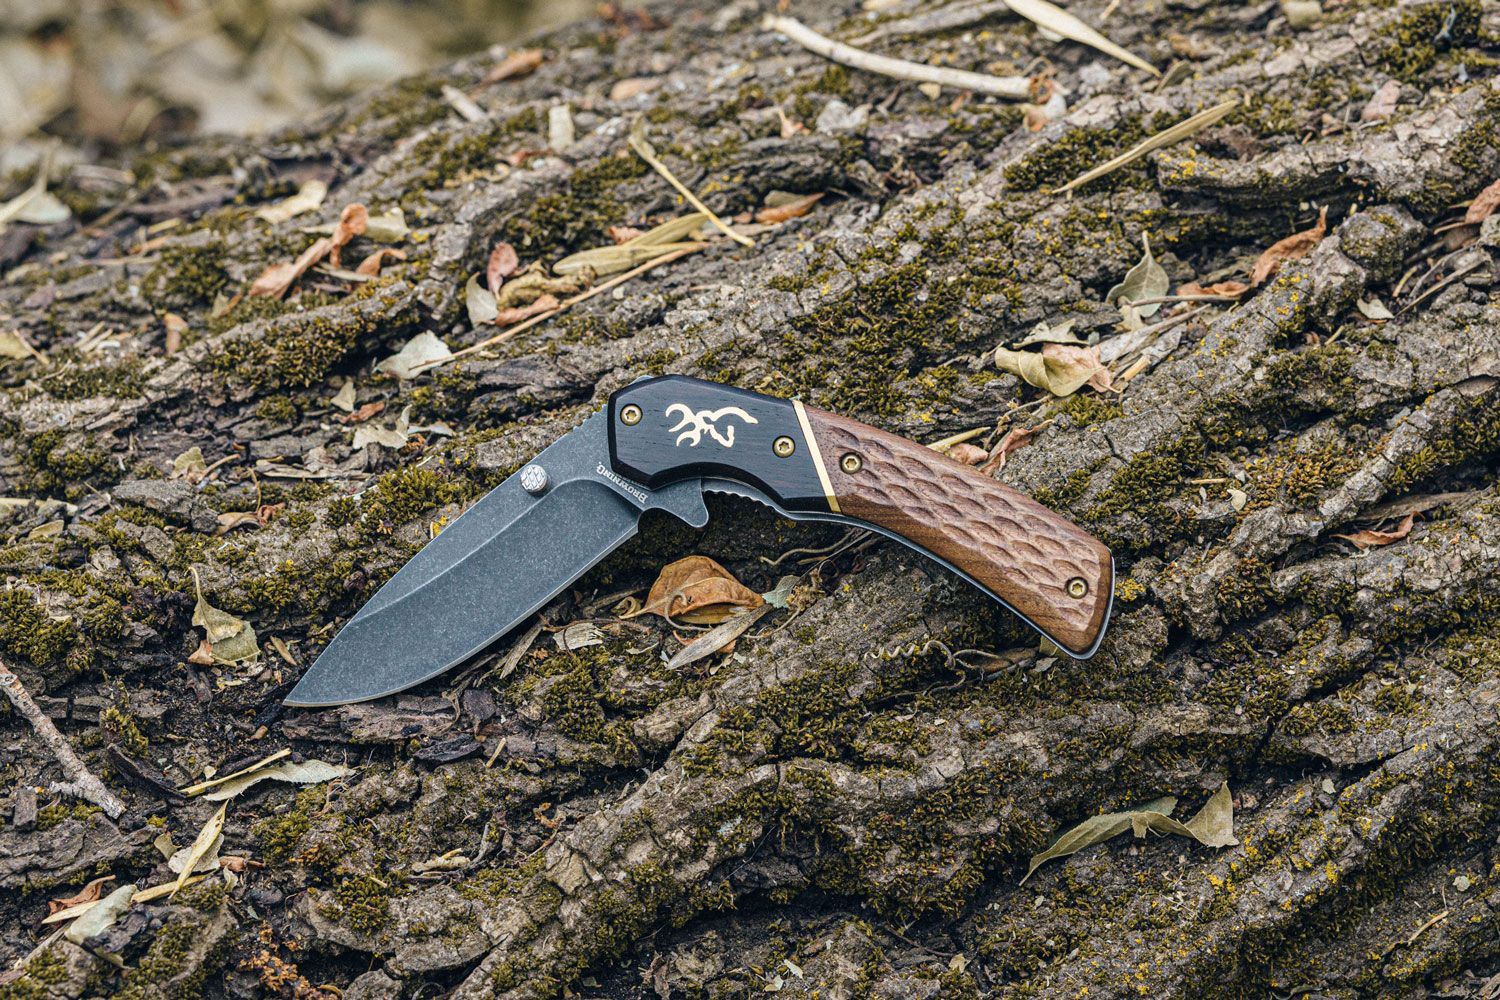 BROWNING Hunter Series Folding Hunting Knife - Large